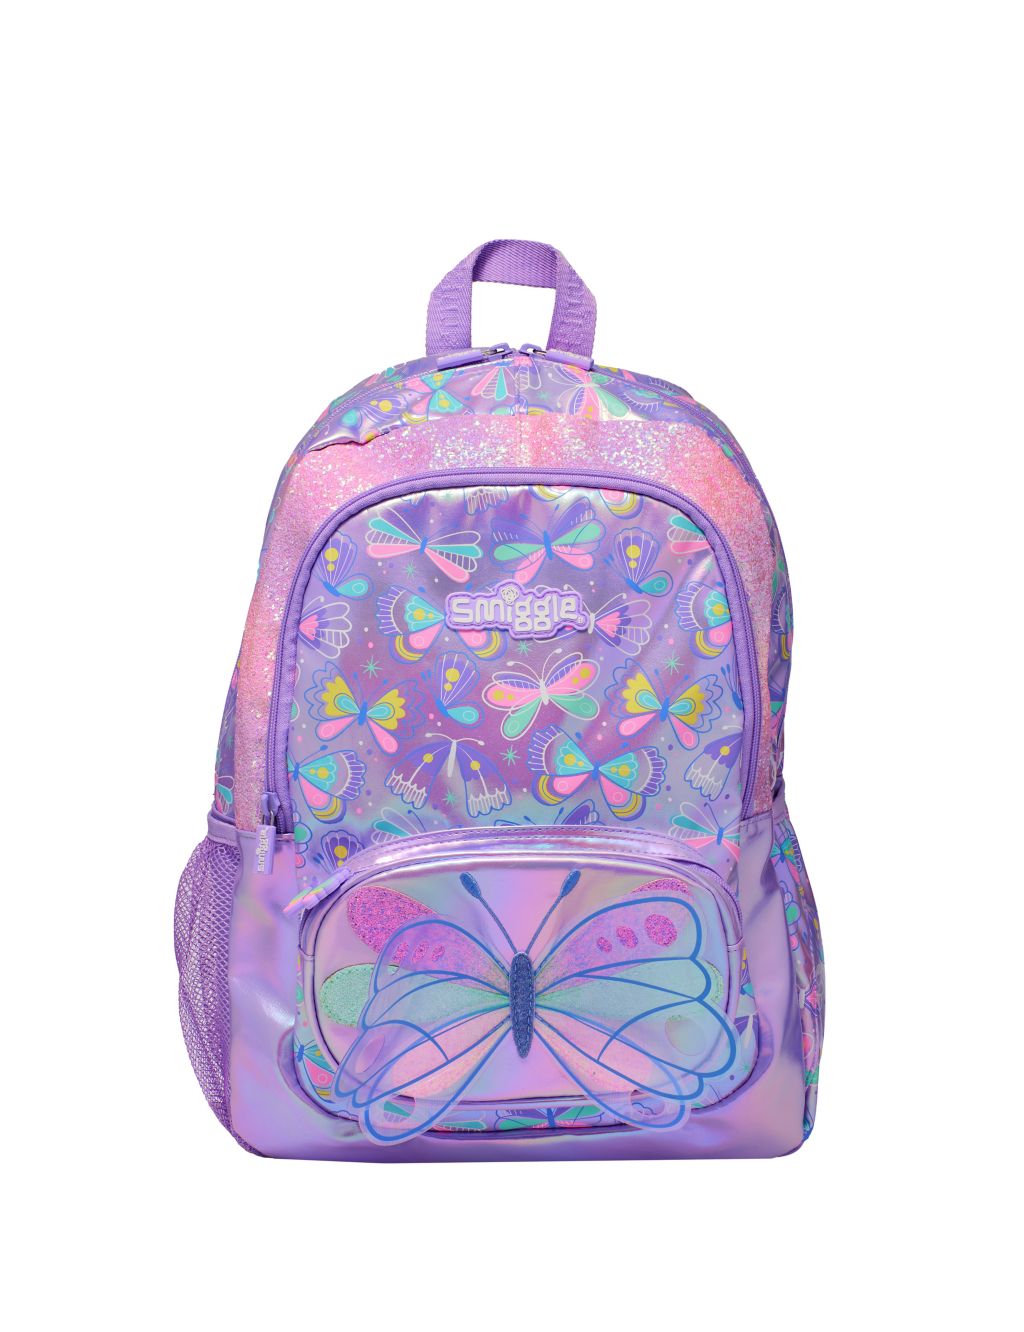 Kids' Butterfly Glitter Backpack image 1